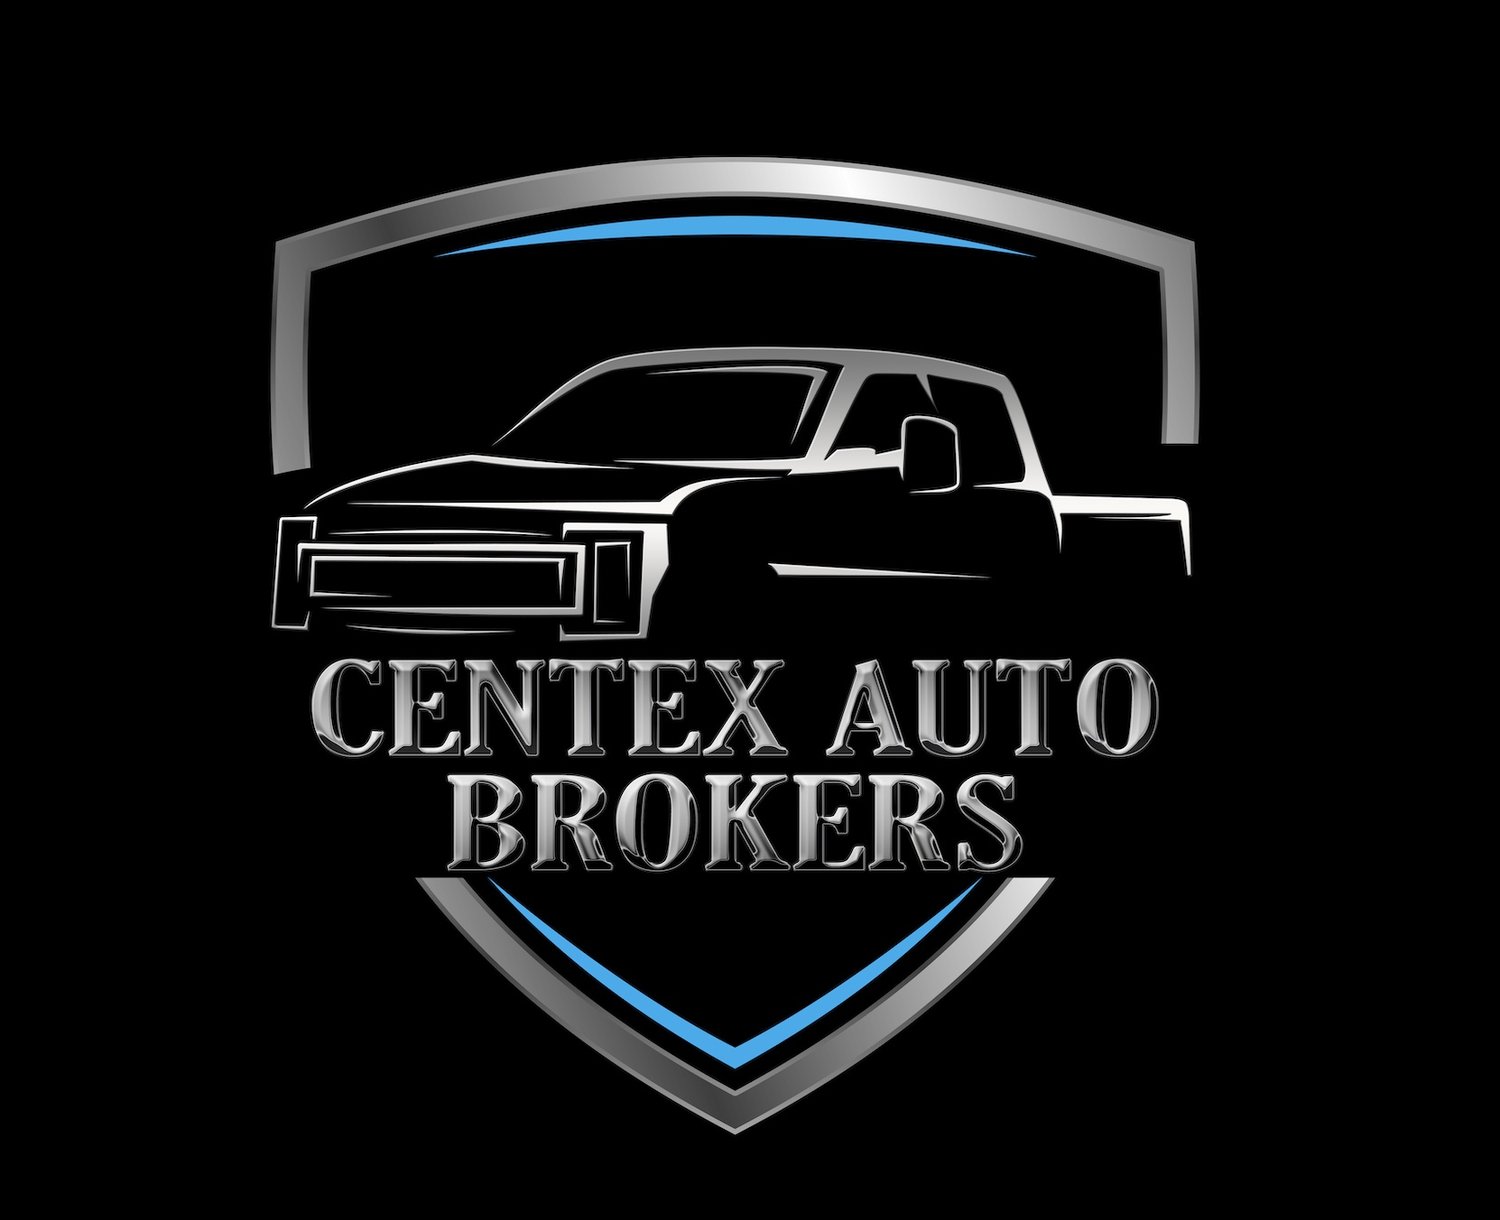 Centex Auto Brokers